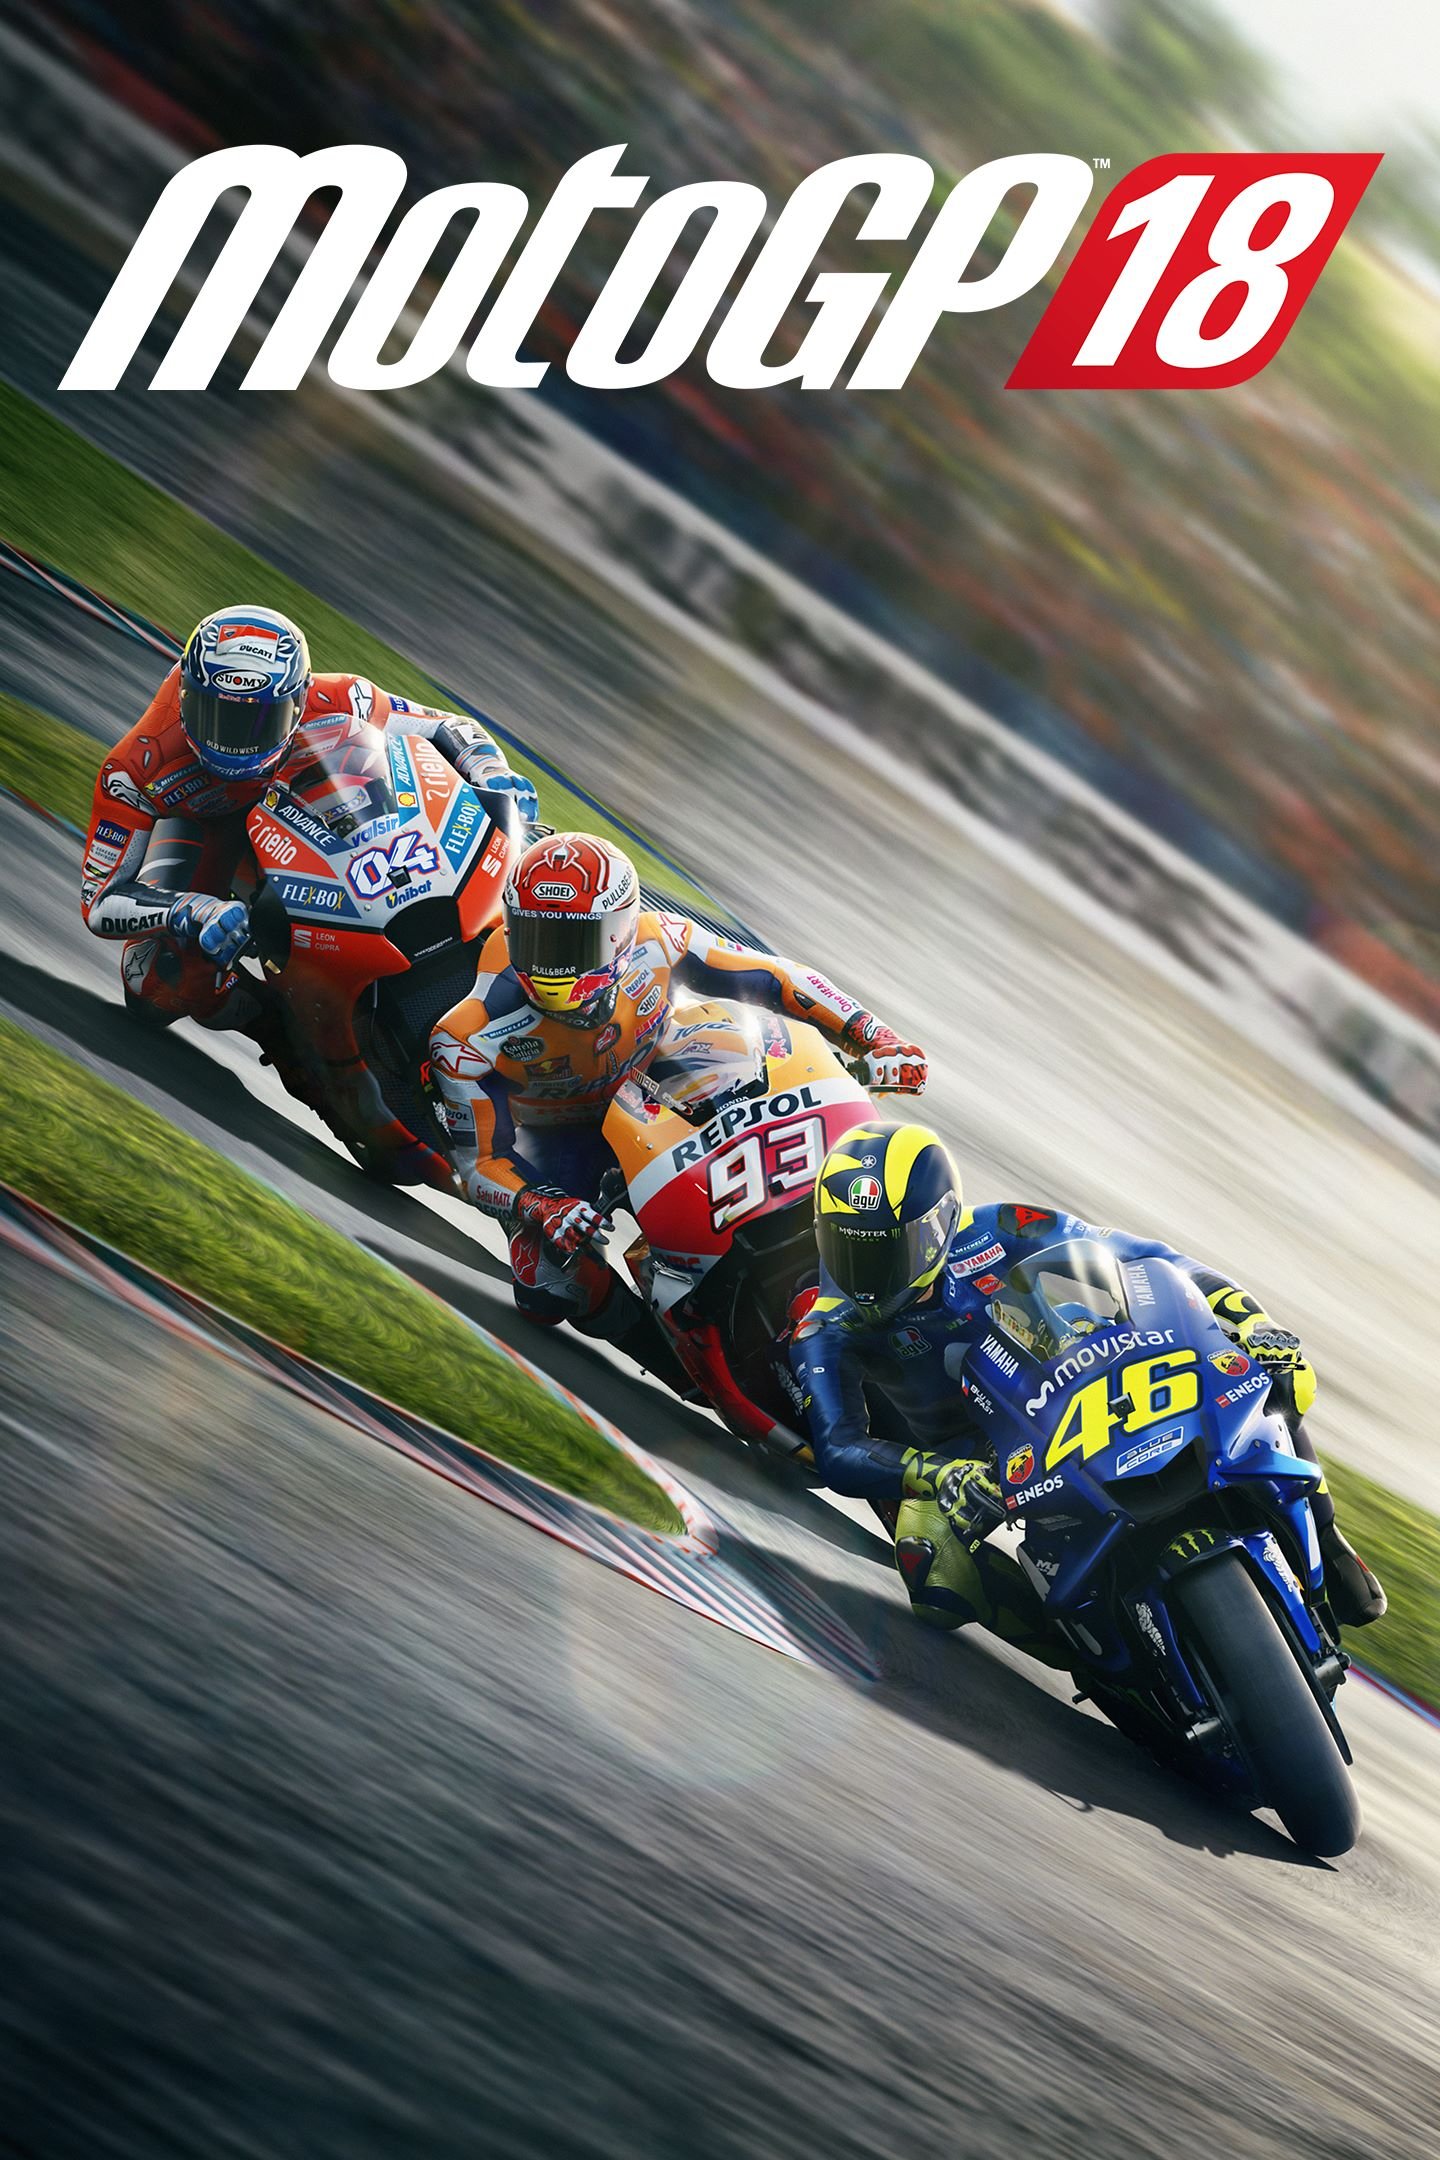 Image of MotoGP 18